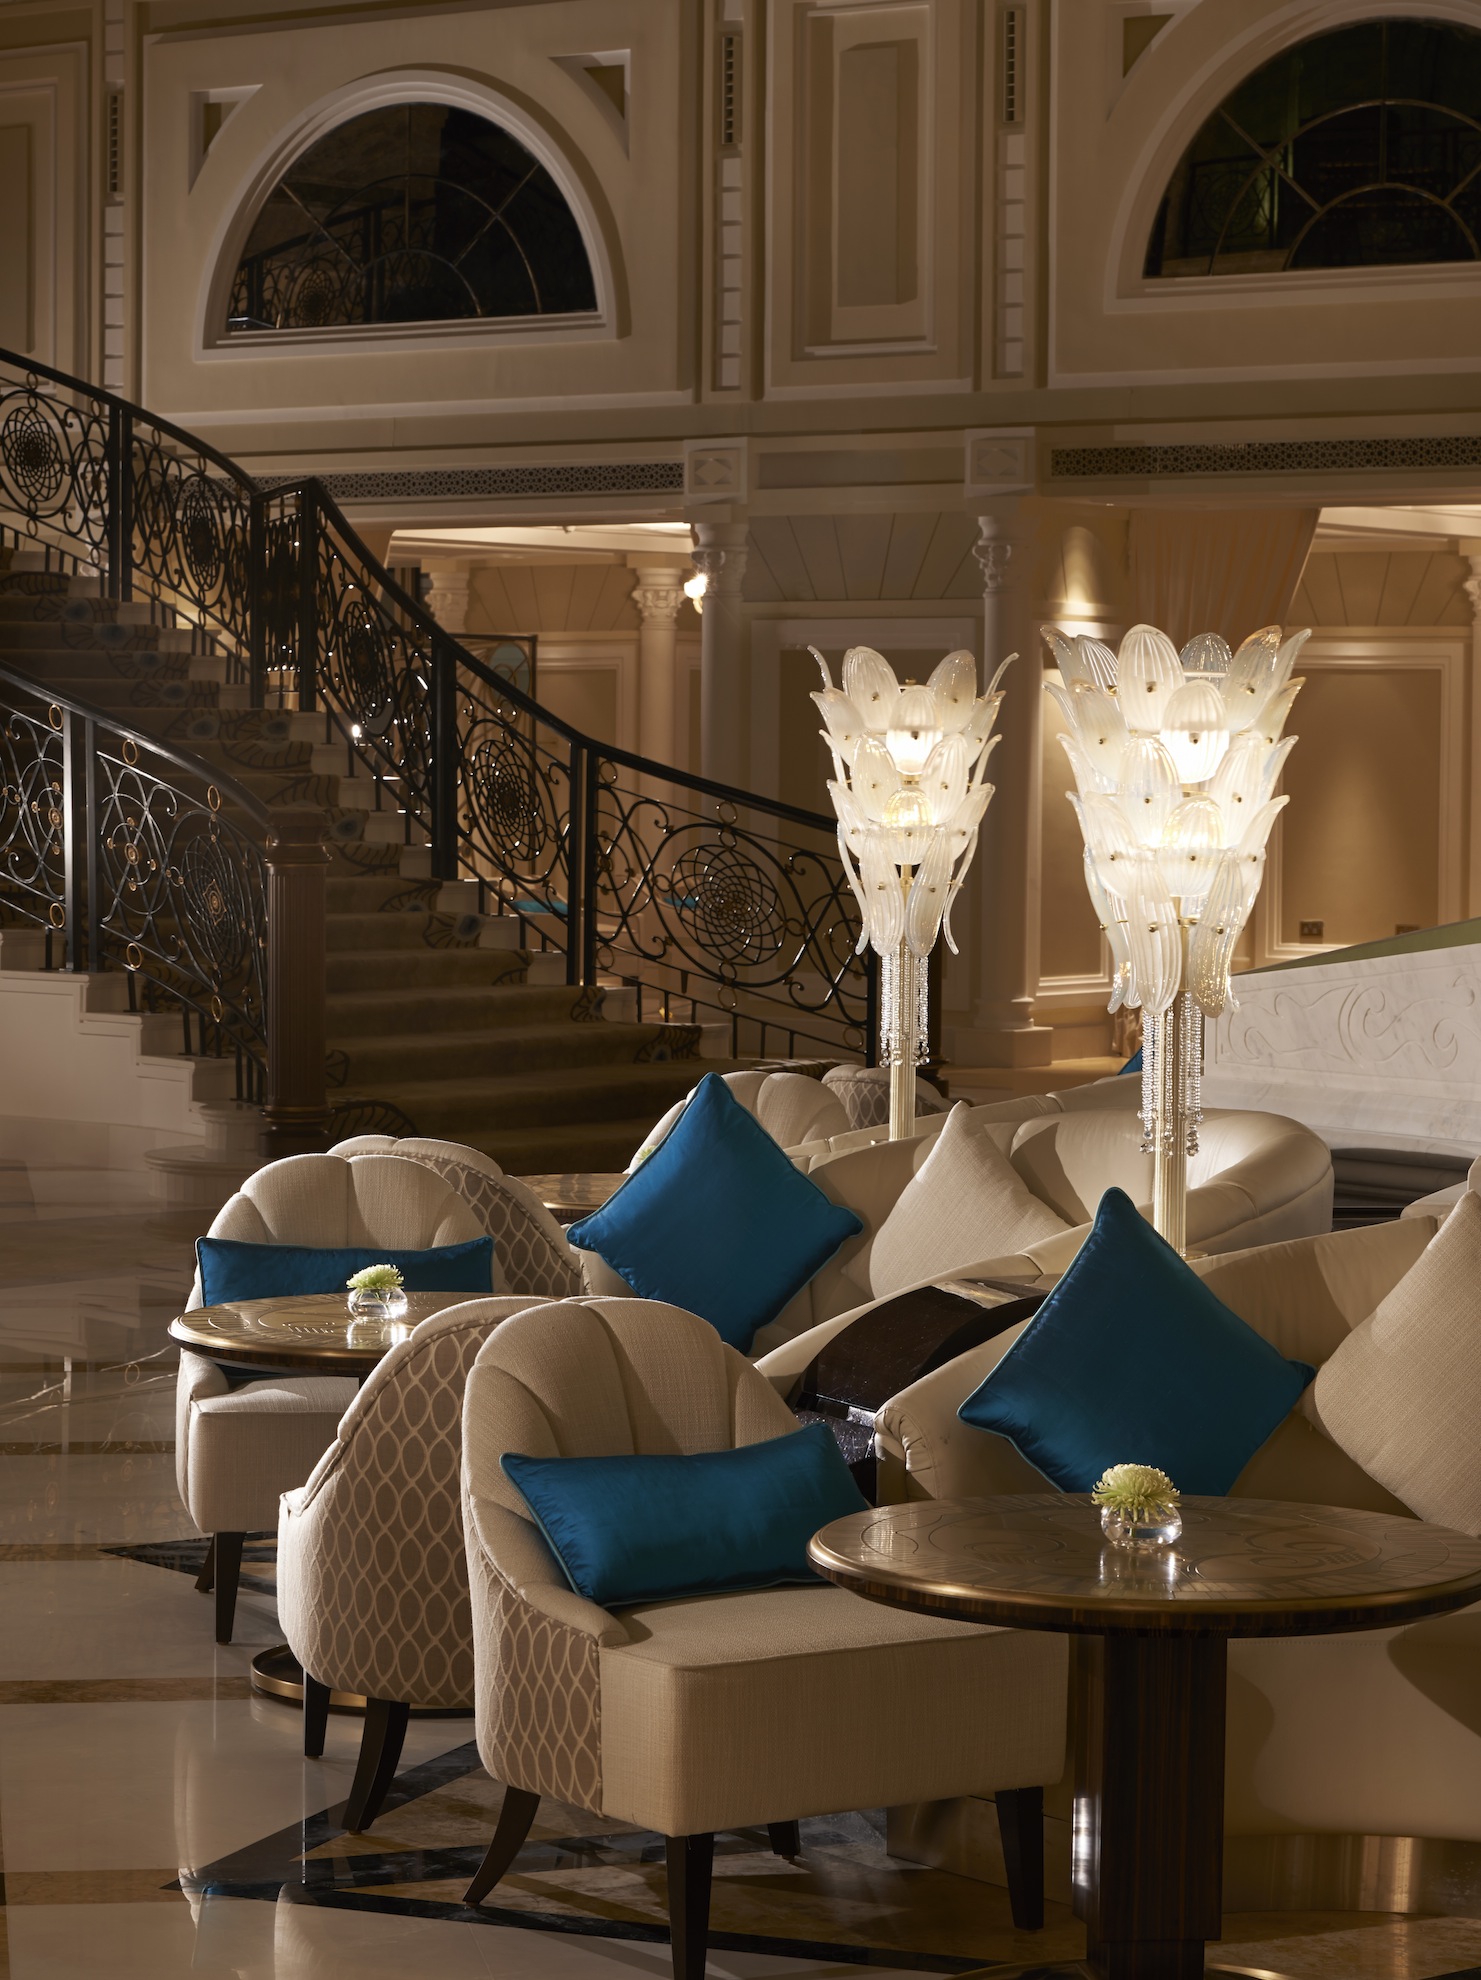 Waldorf Astoria, Ras Al Khaimah, with Rolls-Royce Phantom